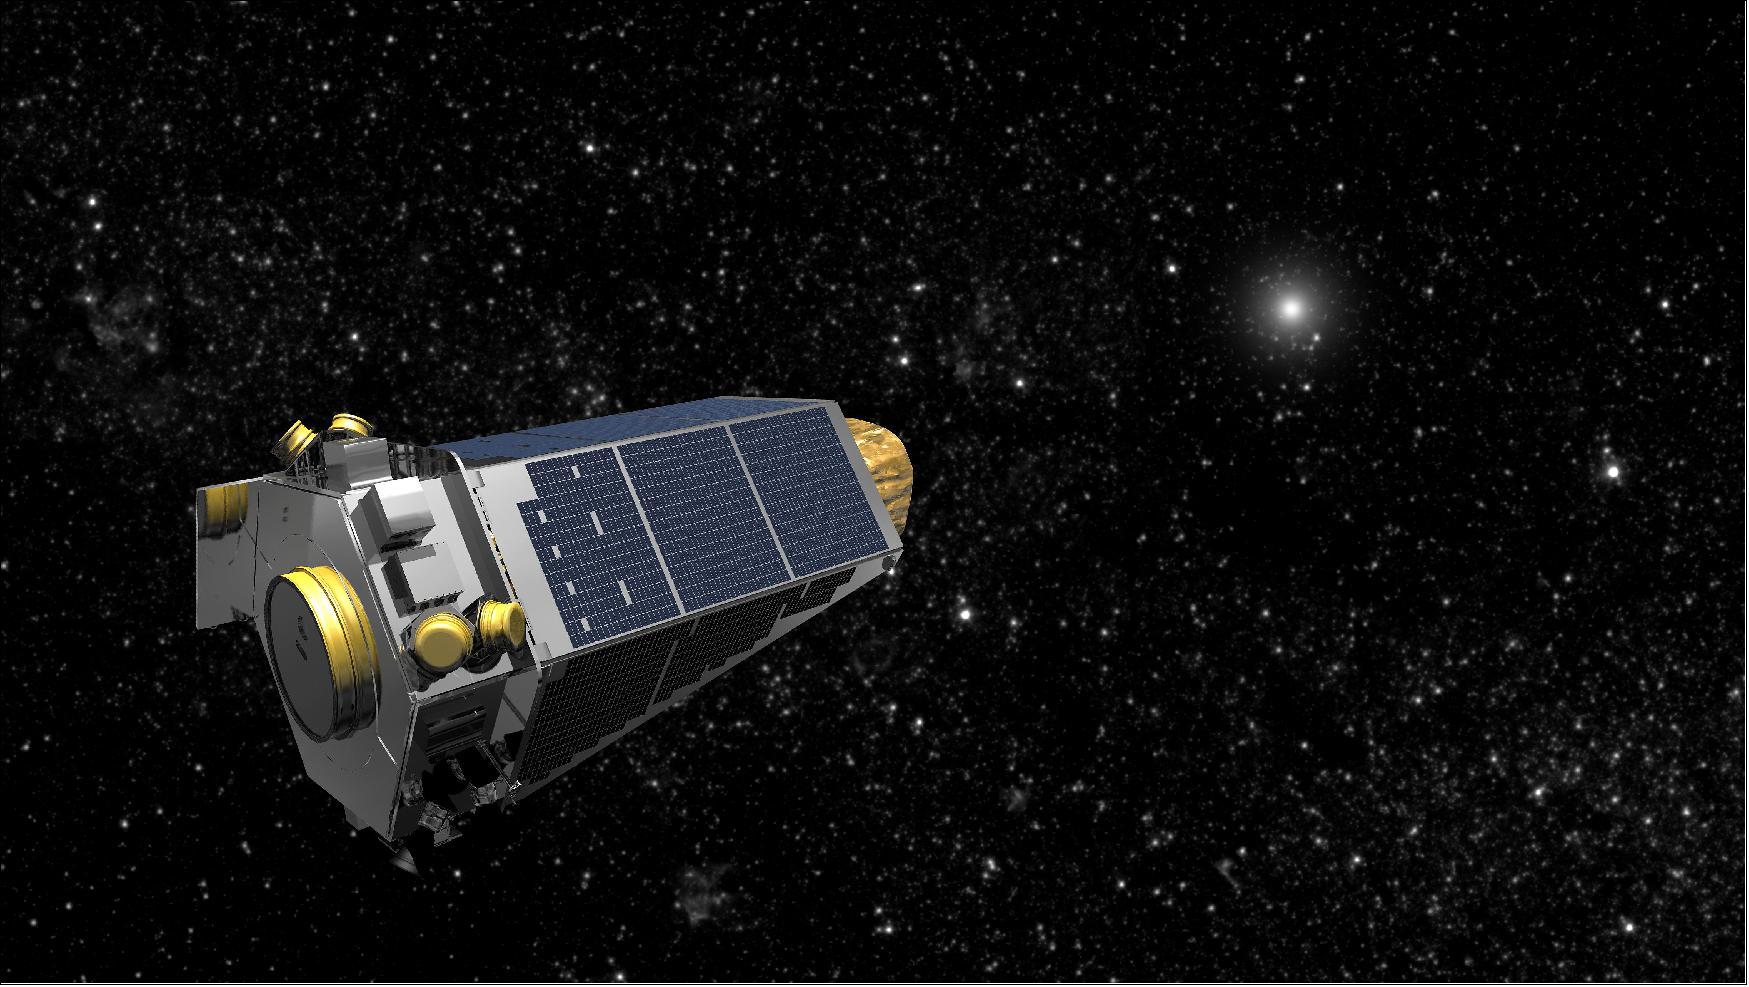 Figure 7: Illustration of the Kepler spacecraft in orbit (image credit: NASA)